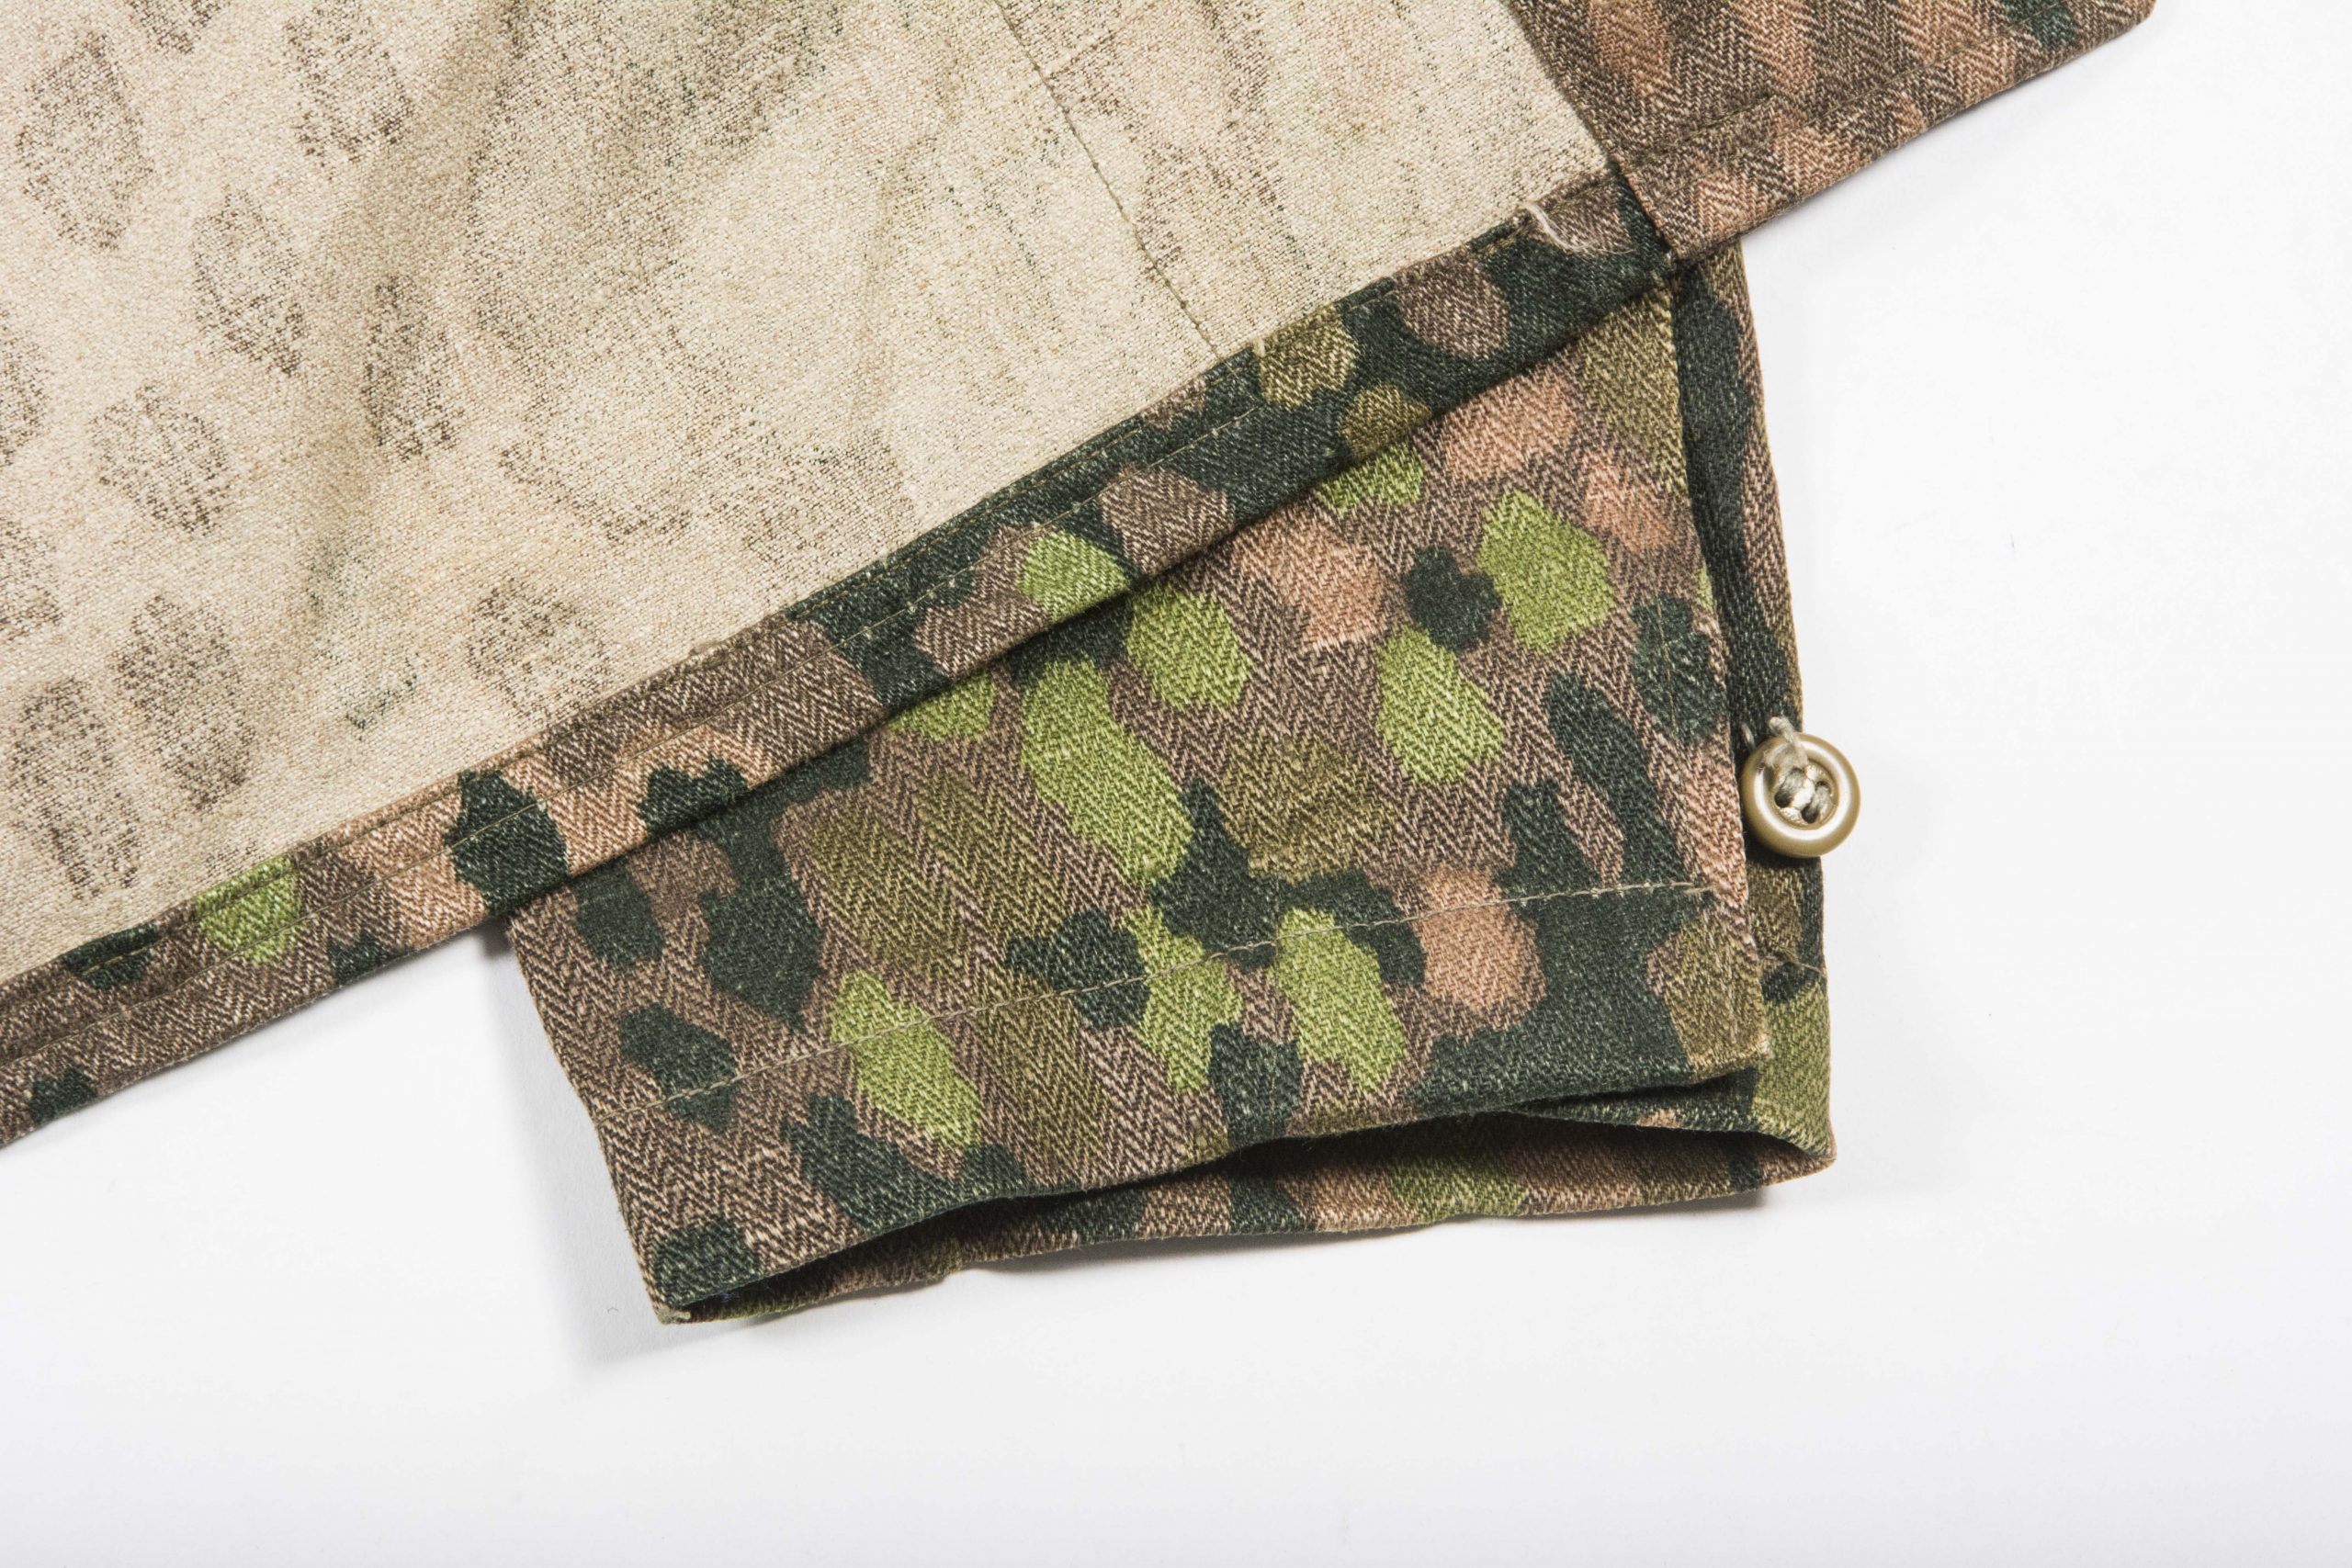 Waffen-SS dot pattern uniform in Erbsentarn camouflage marked 0/0793 ...